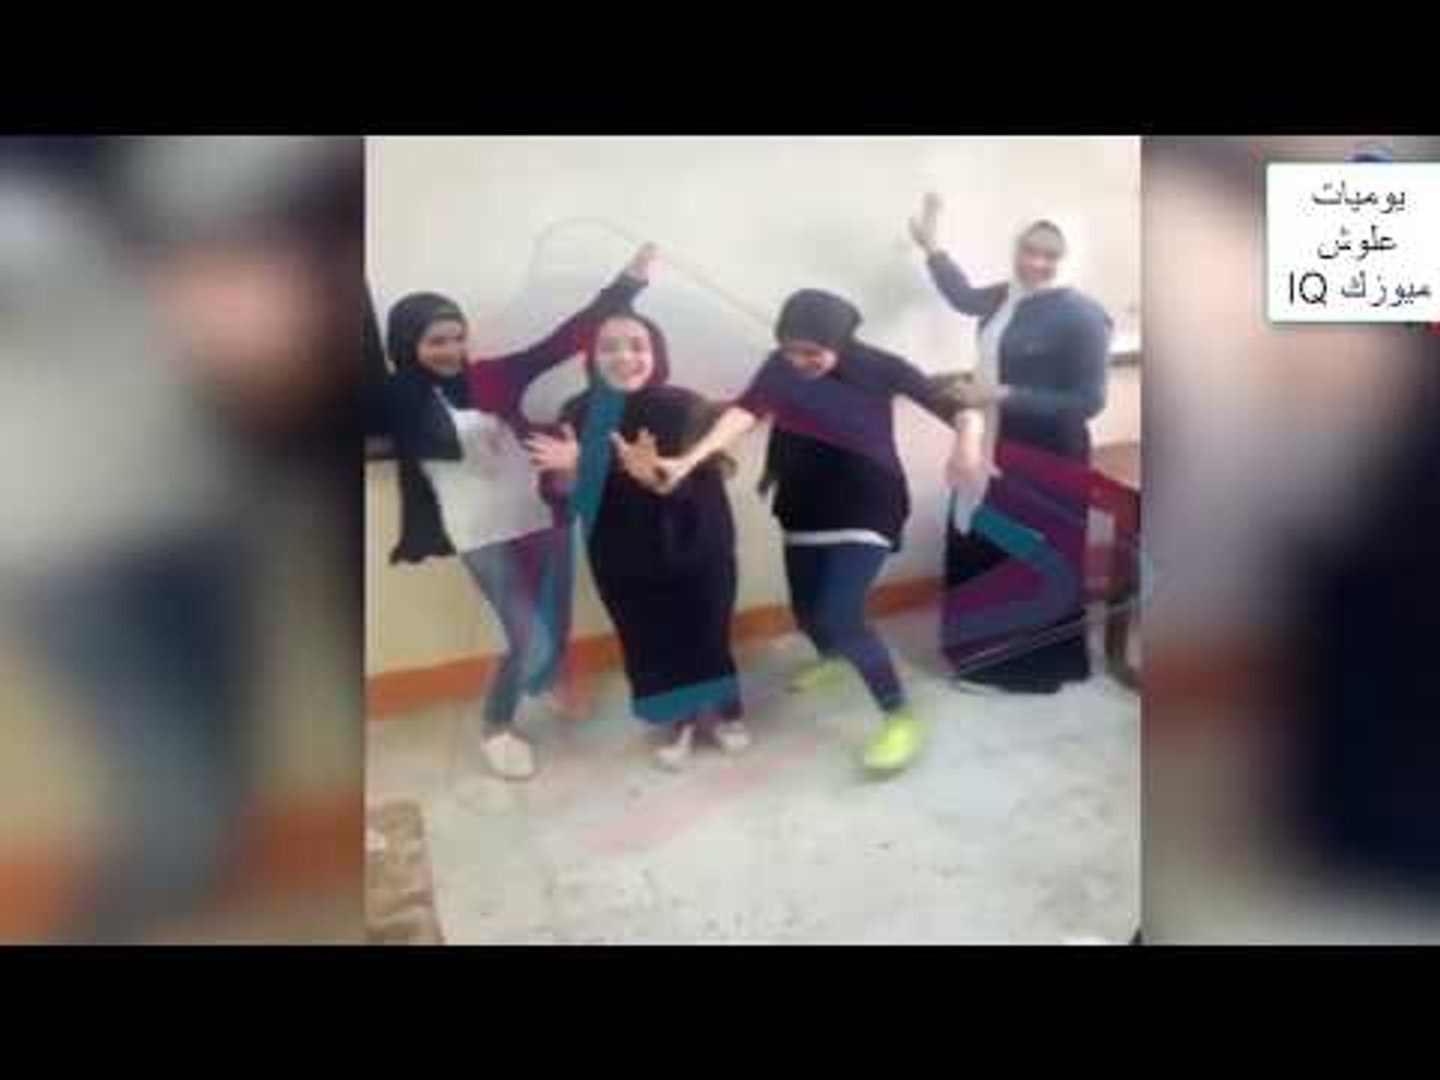 رقص بنات خاص في مدرسه بمناسبة رأس السنه - video Dailymotion